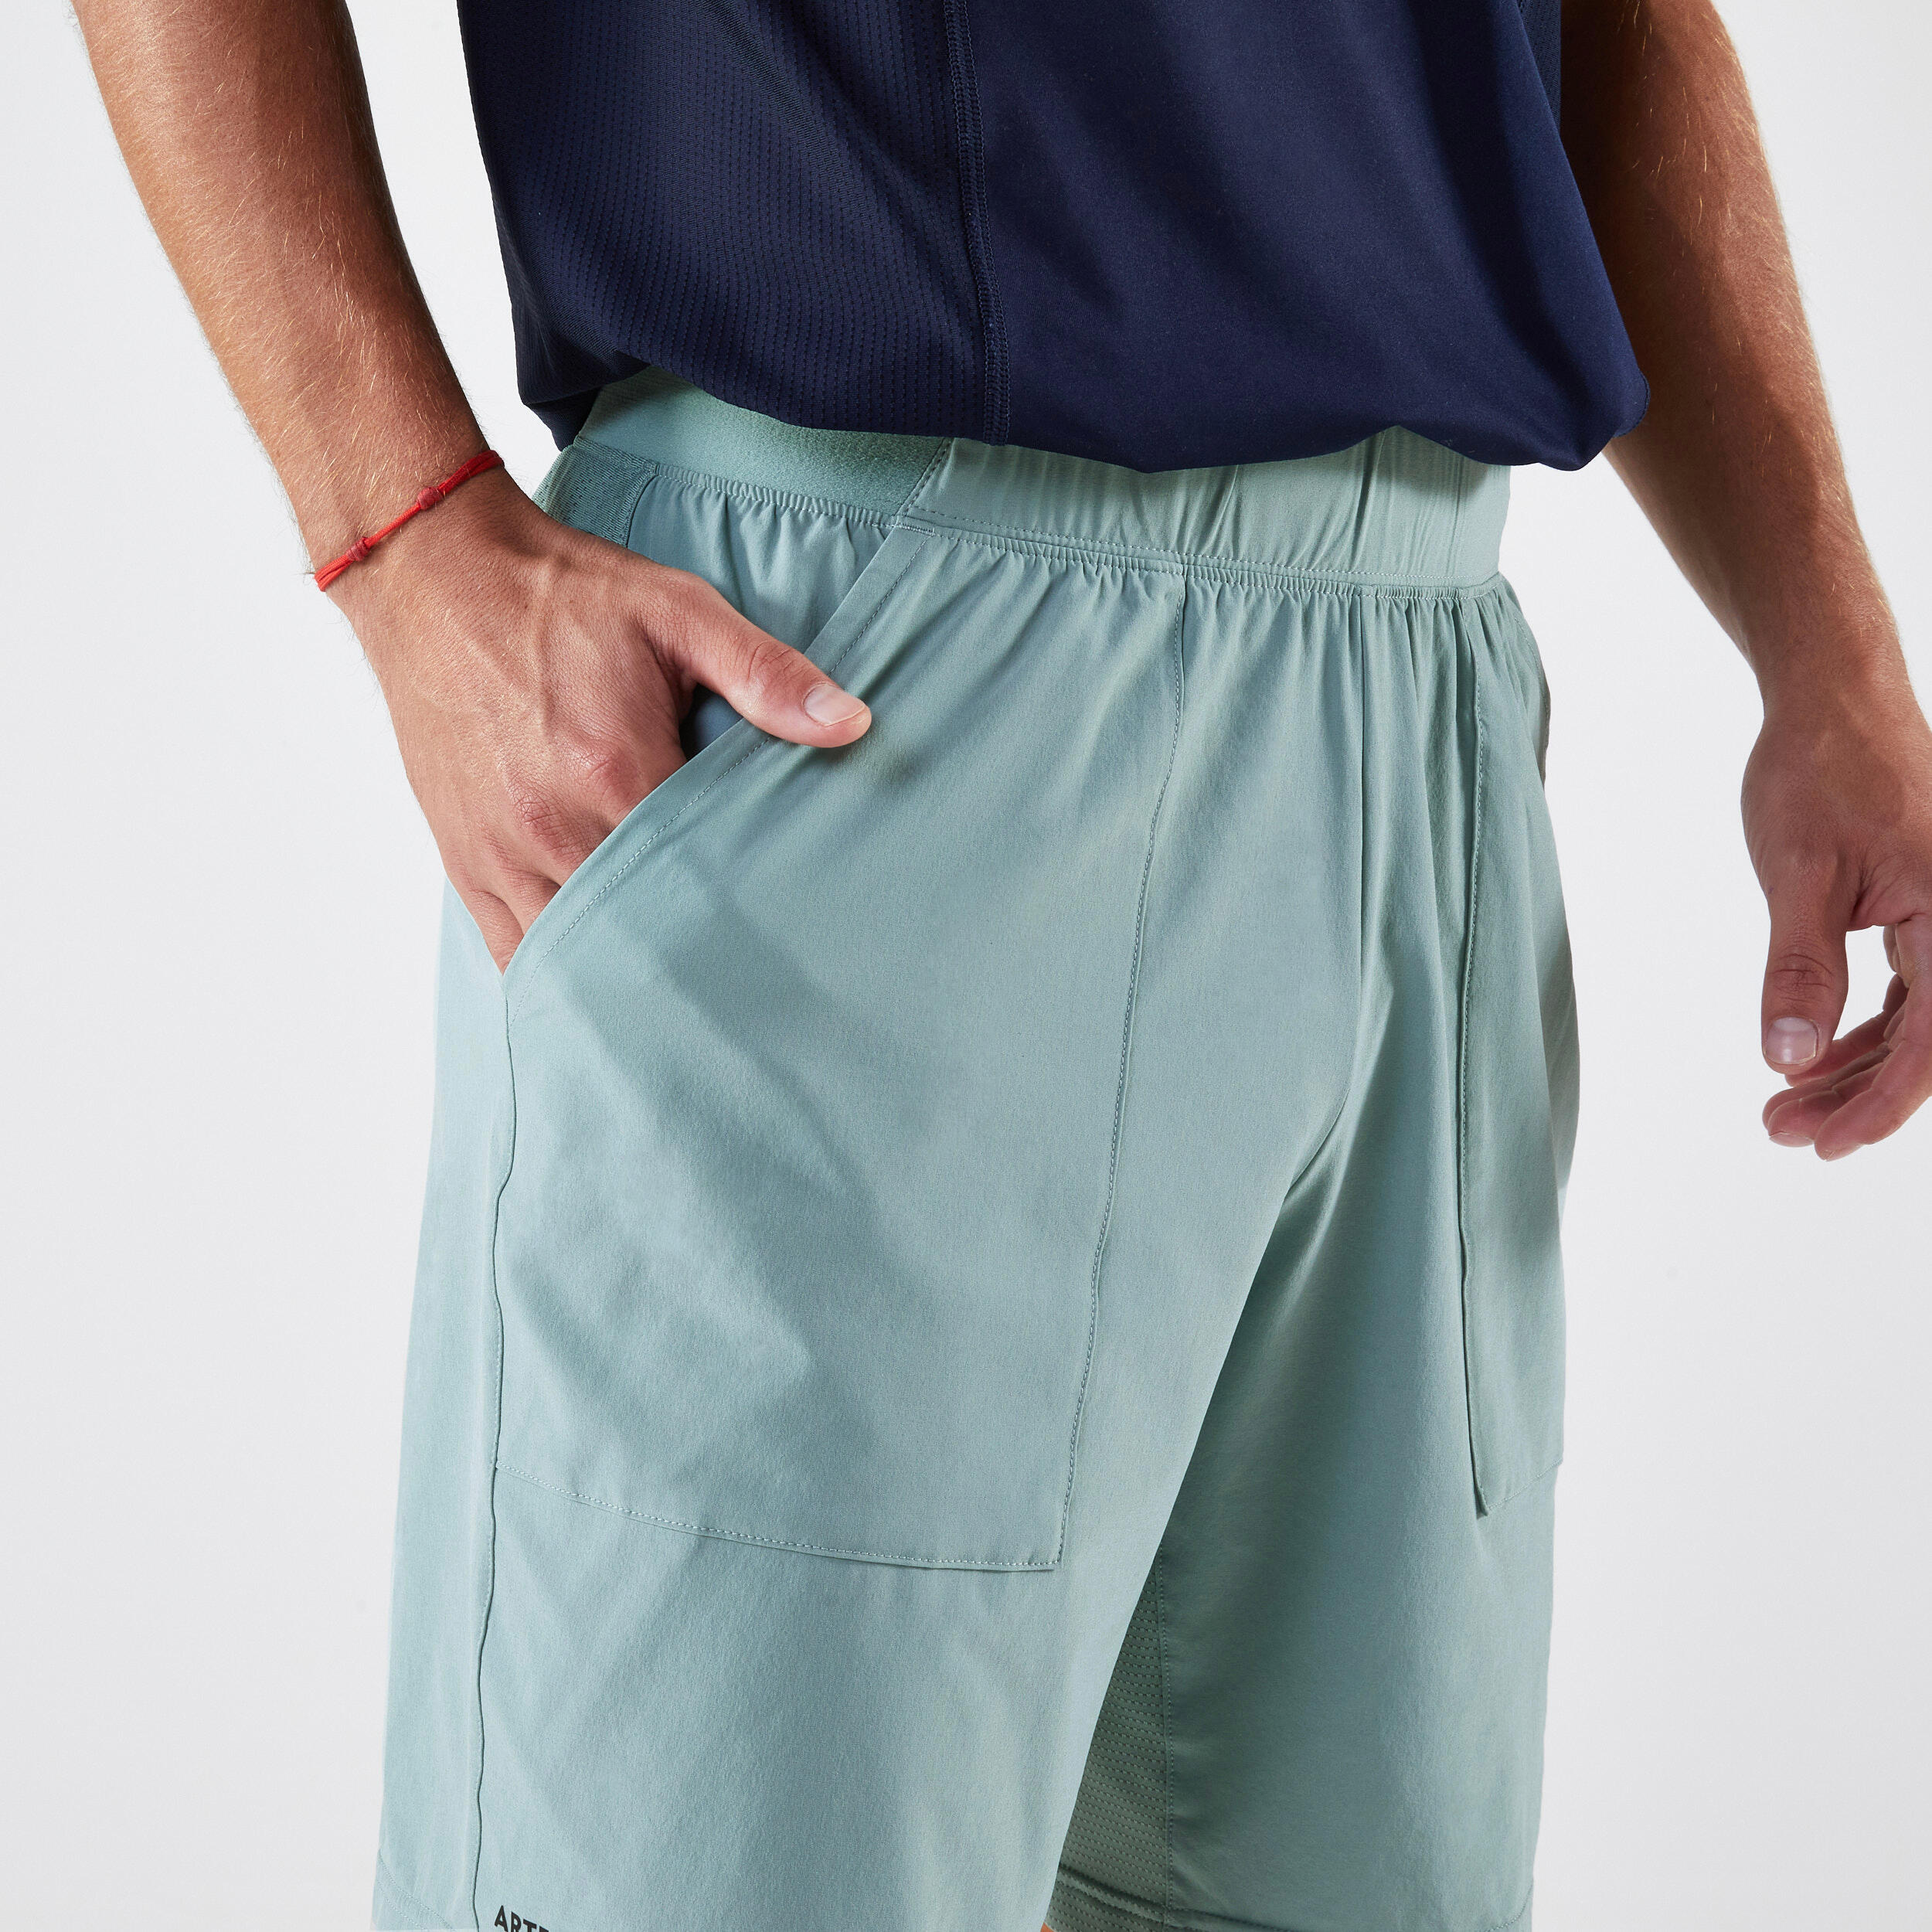 Men's Tennis Breathable Shorts Dry - Greyish Green 4/7